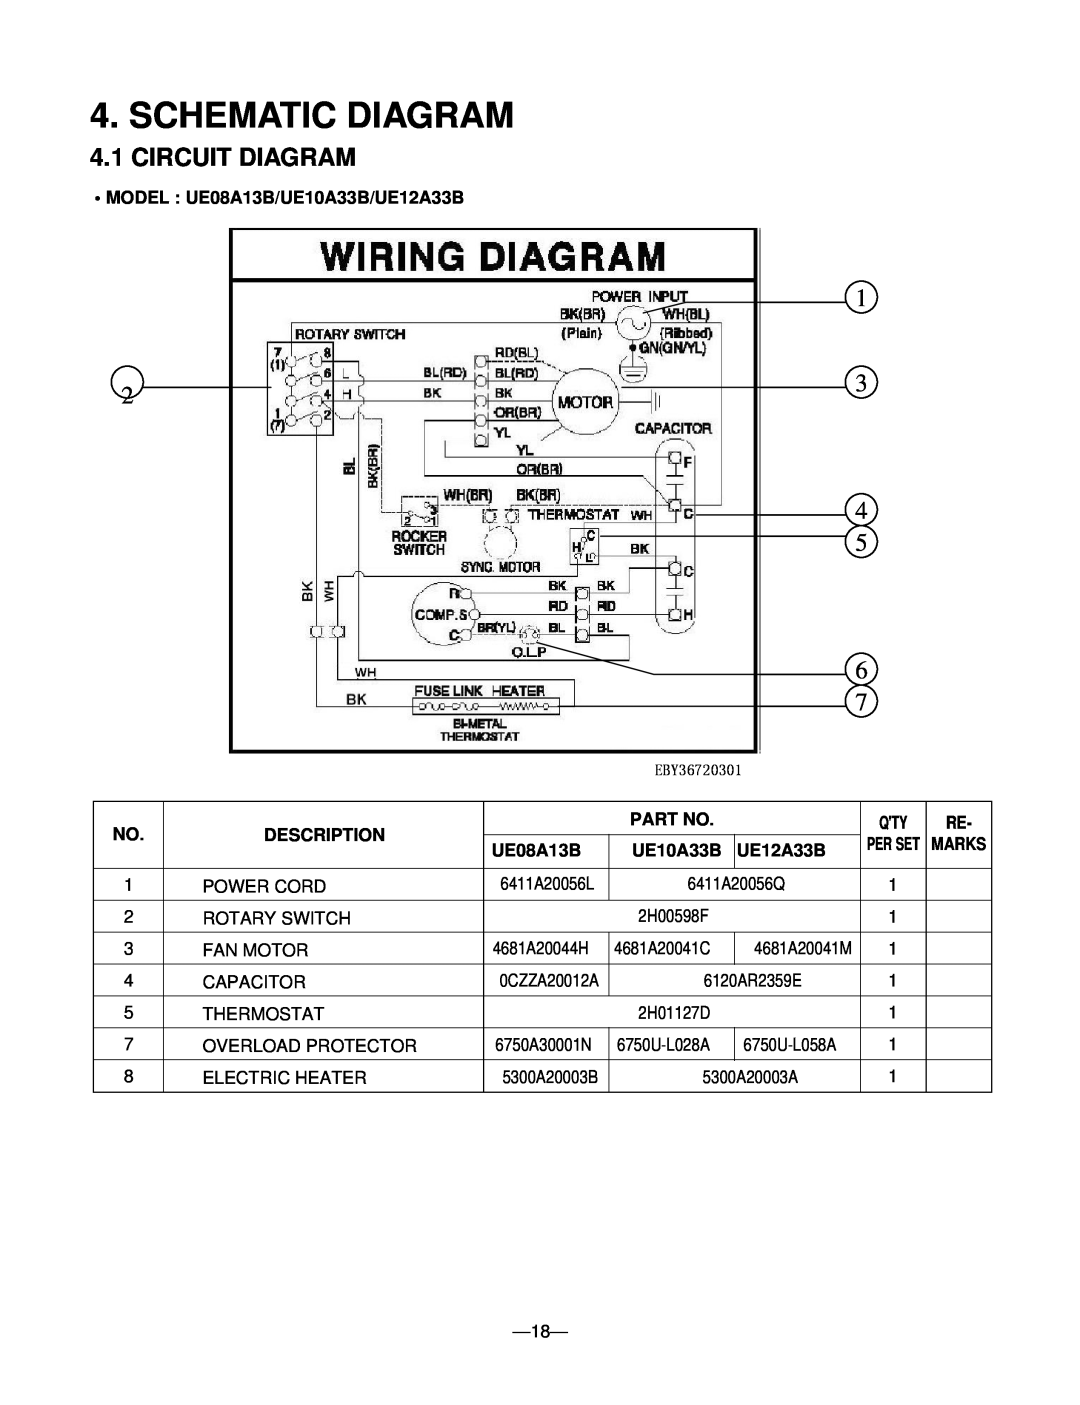 Friedrich Schematic Diagram, Circuit Diagram, 1 3 4 5 6 7, • MODEL : UE08A13B/UE10A33B/UE12A33B, Description, Part No 